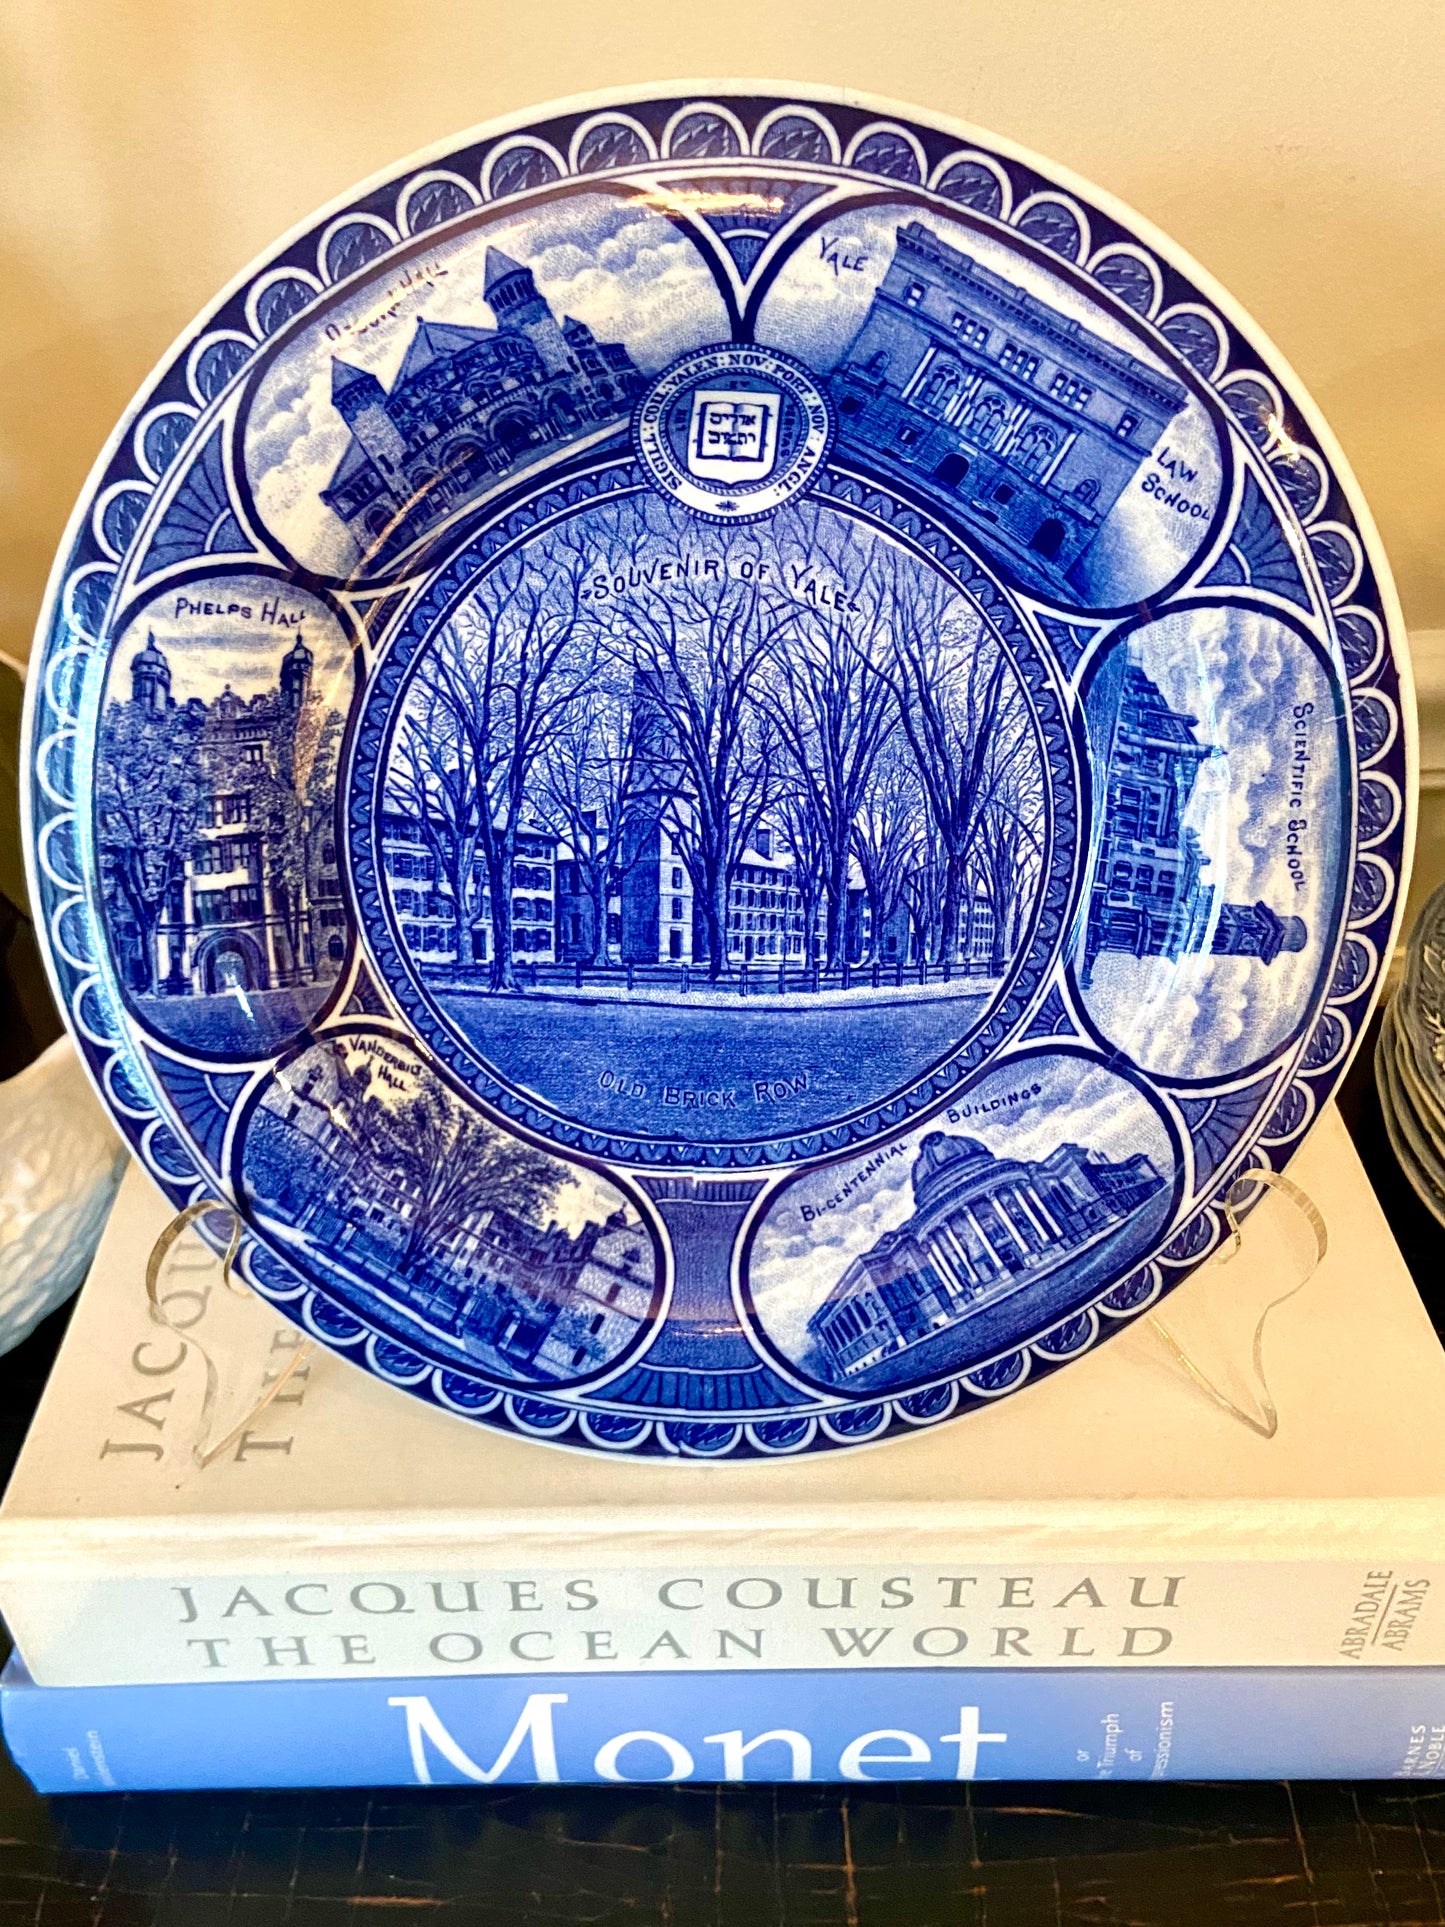 Vintage blue and white Yale University Souvenir Plate by Rowland & Marseilles Co